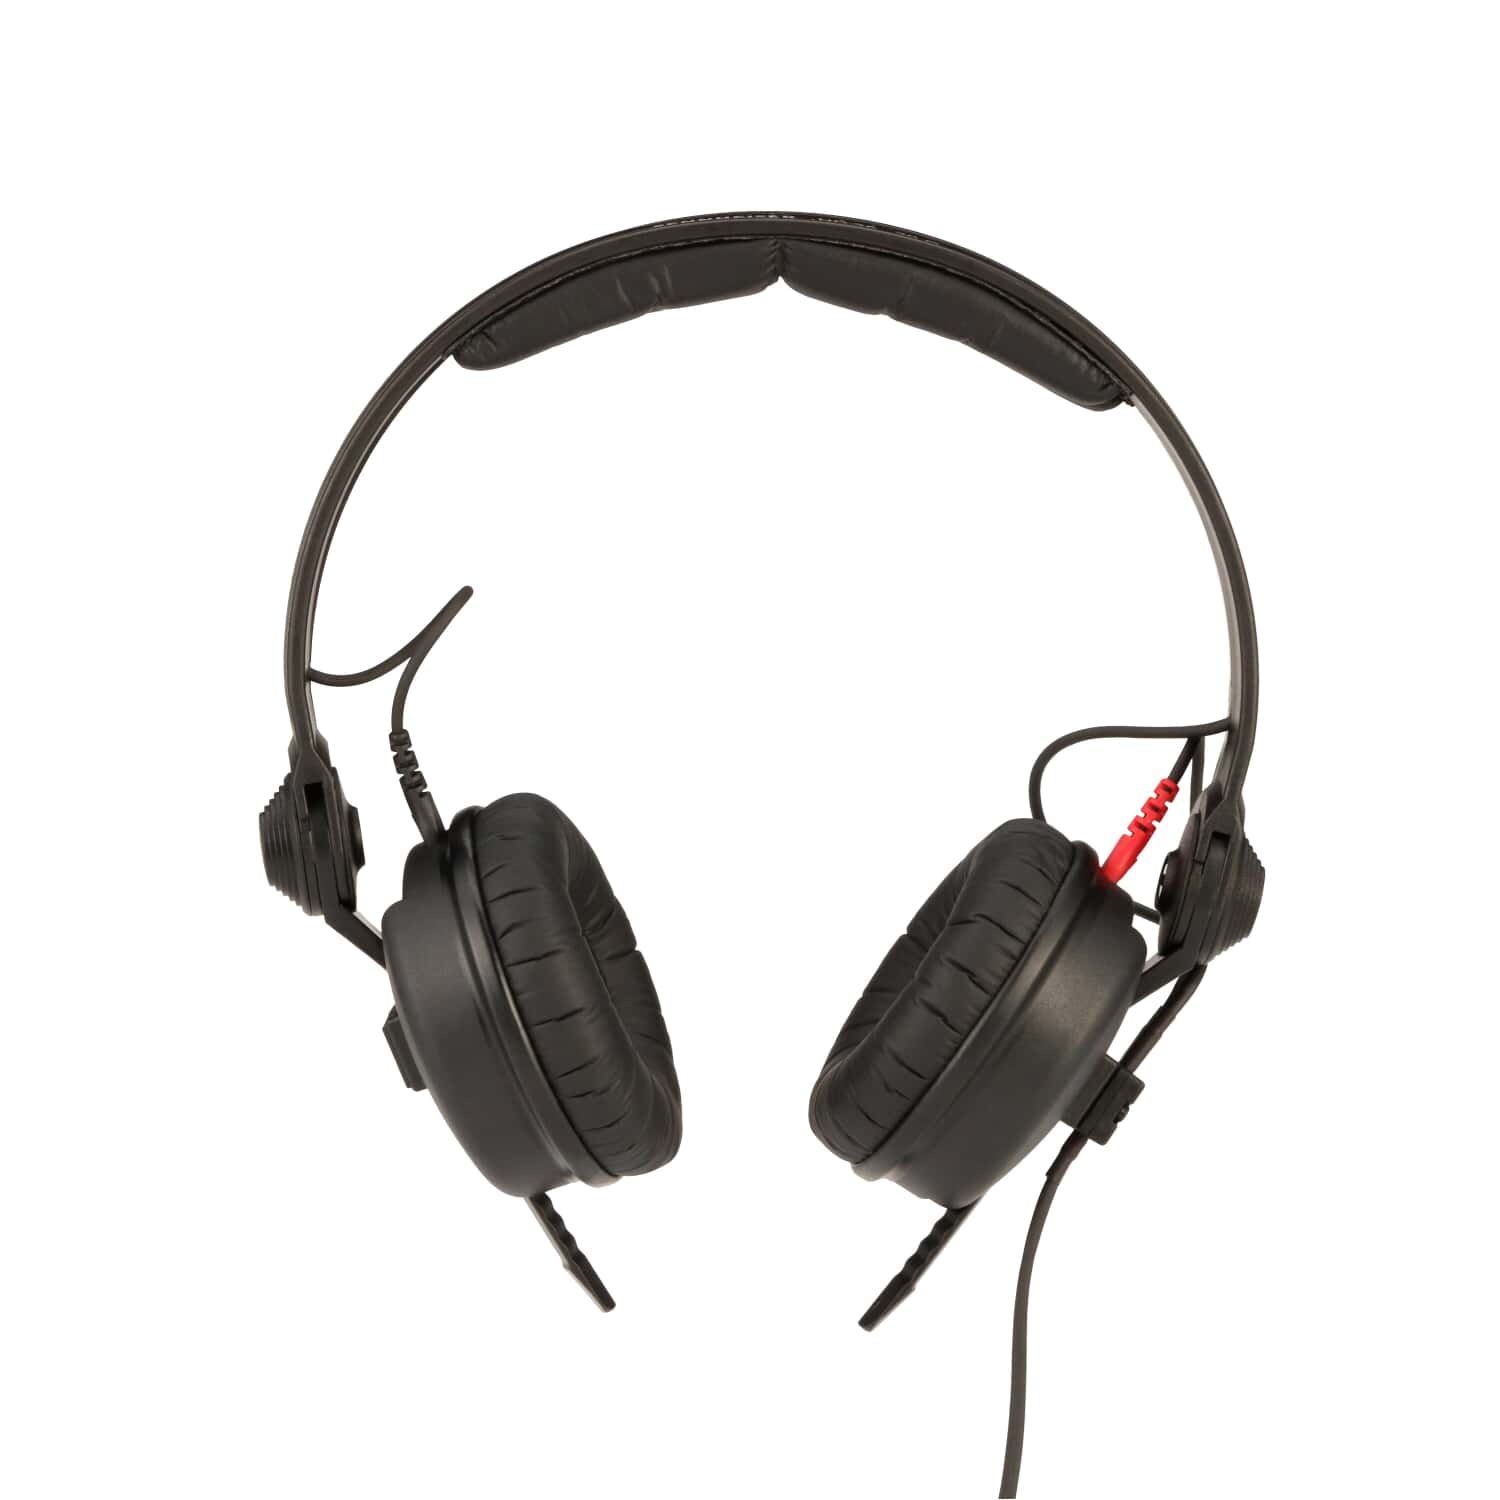 – Professional Monitoring Headphones